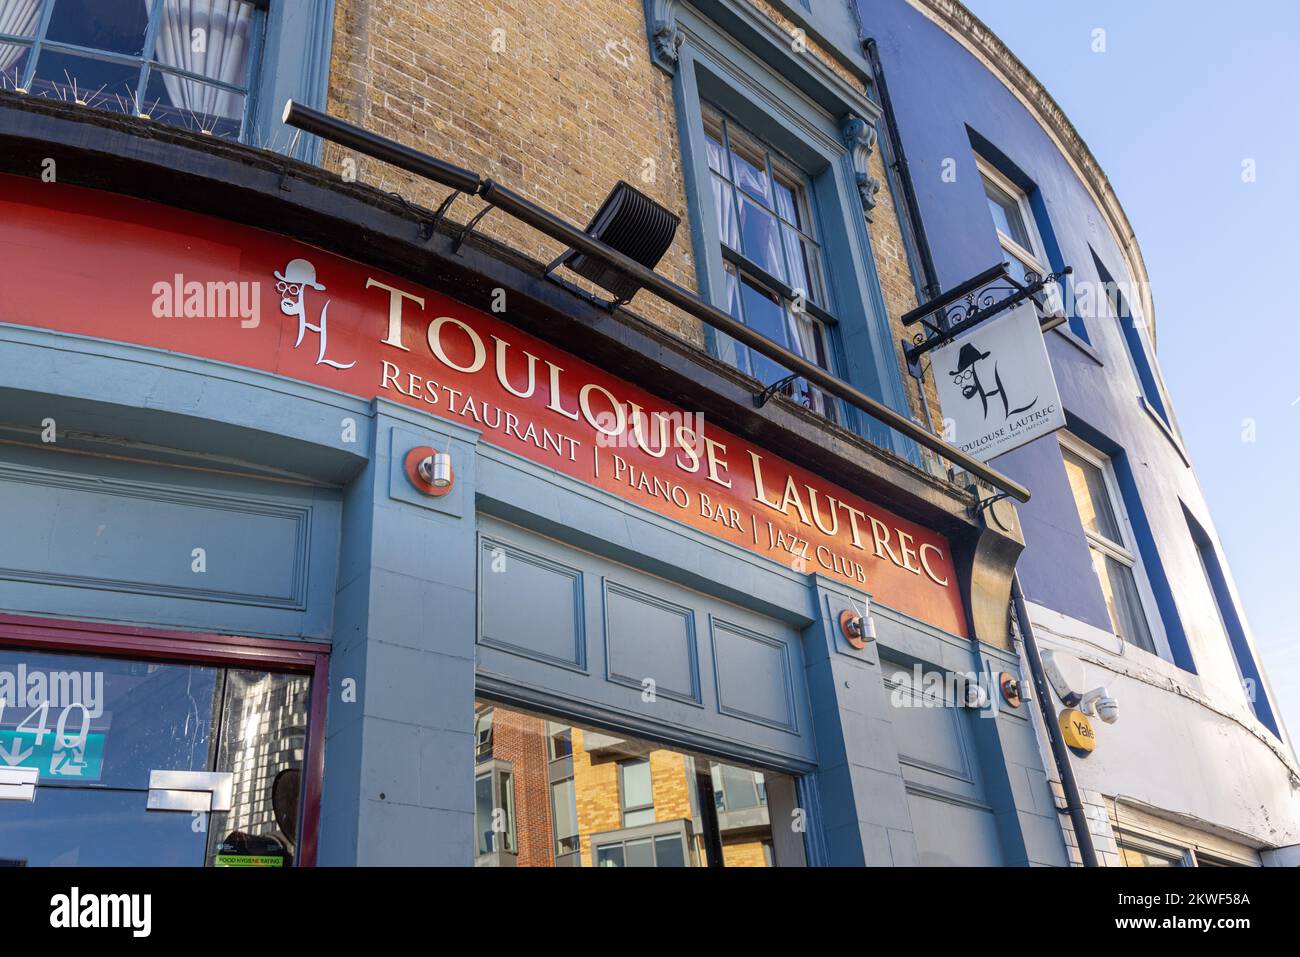 Toulouse Lautrec Restaurant, Kennington Park Road, London, England Stock Photo